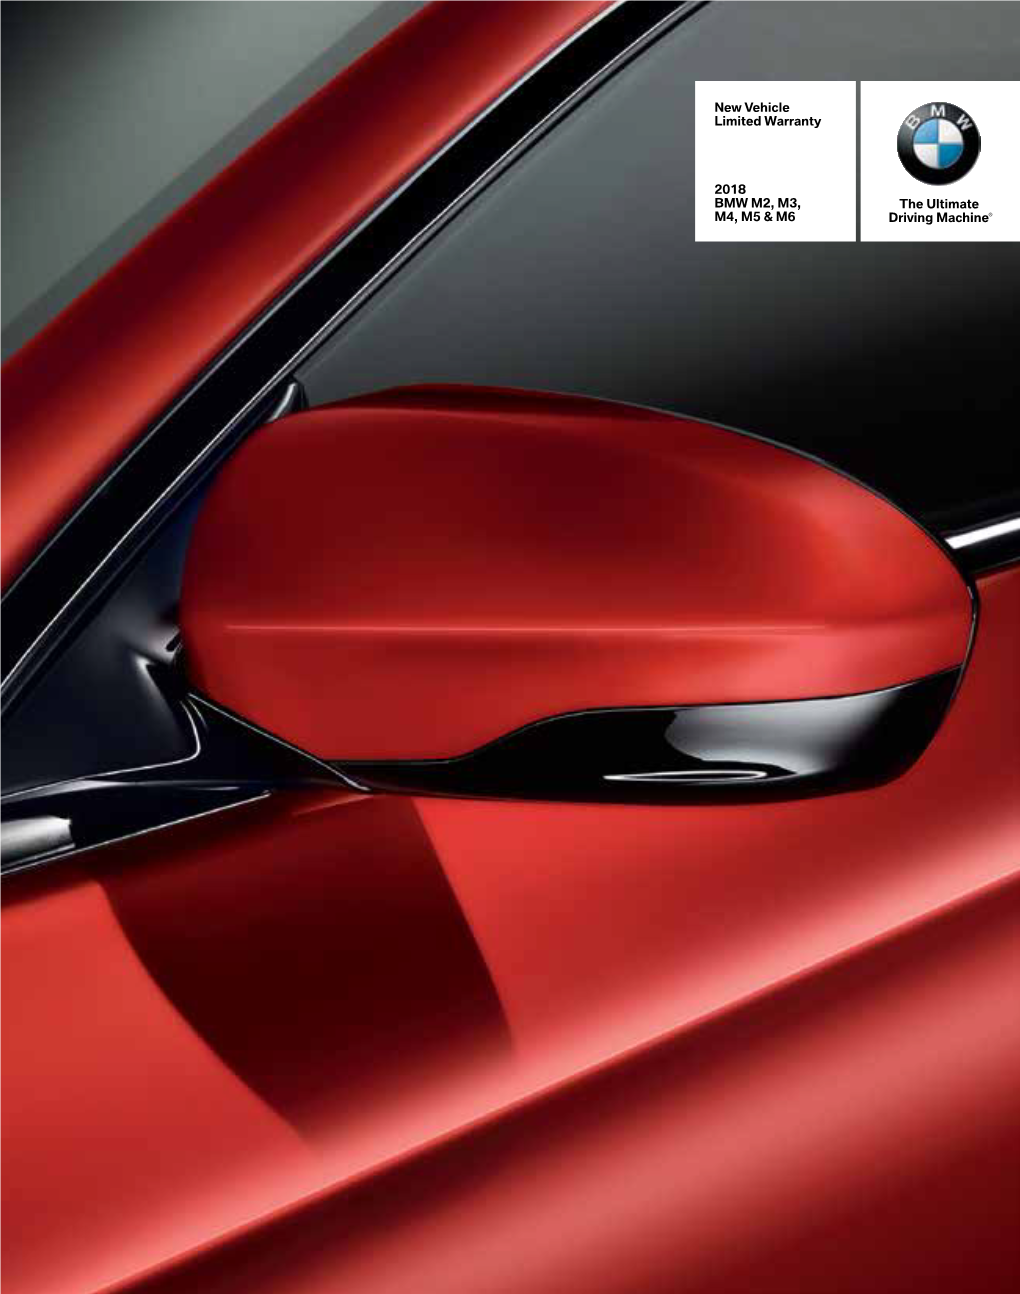 2018 BMW M2, M3, M4, M5 & M6 New Vehicle Limited Warranty